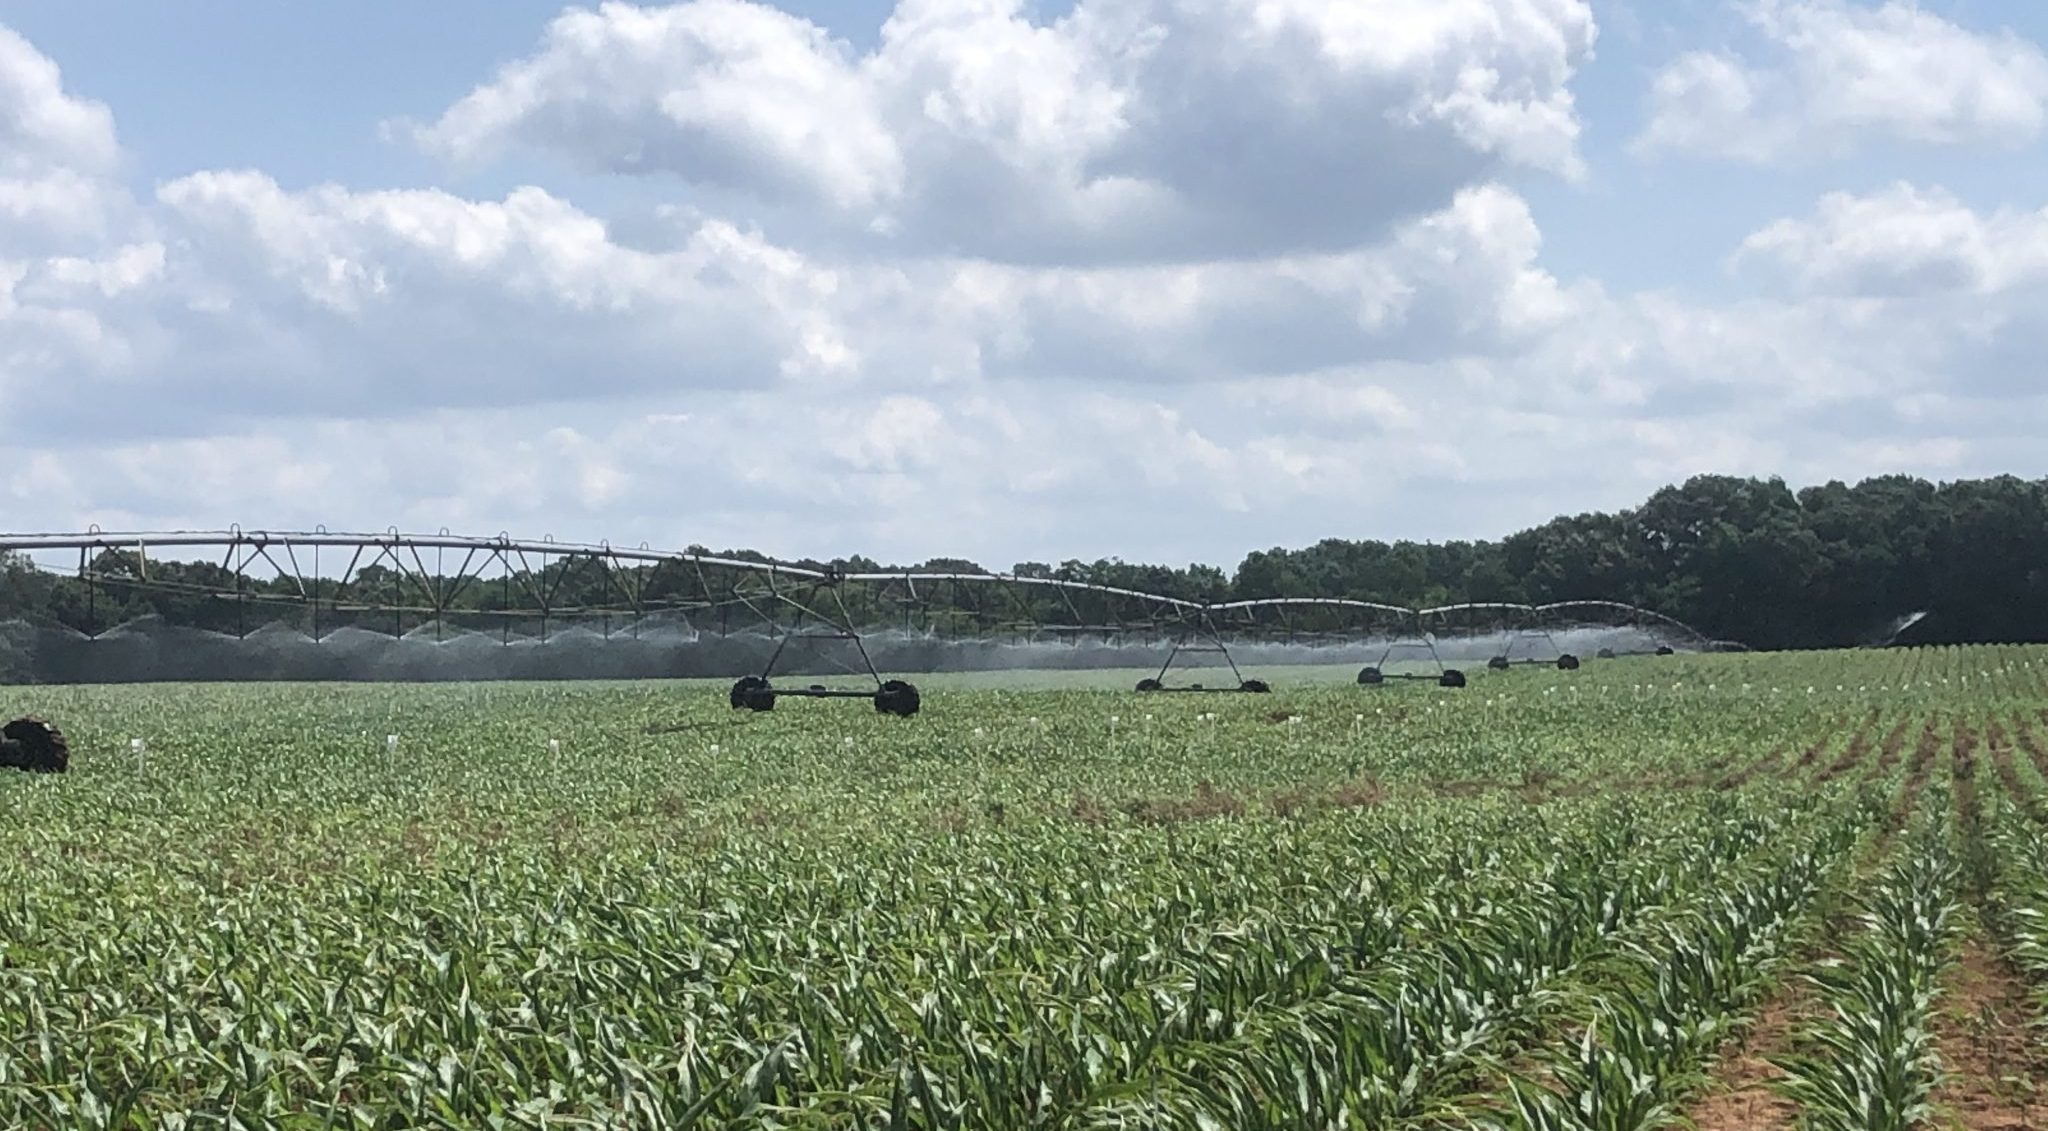 Irrigation equipment in a corn field